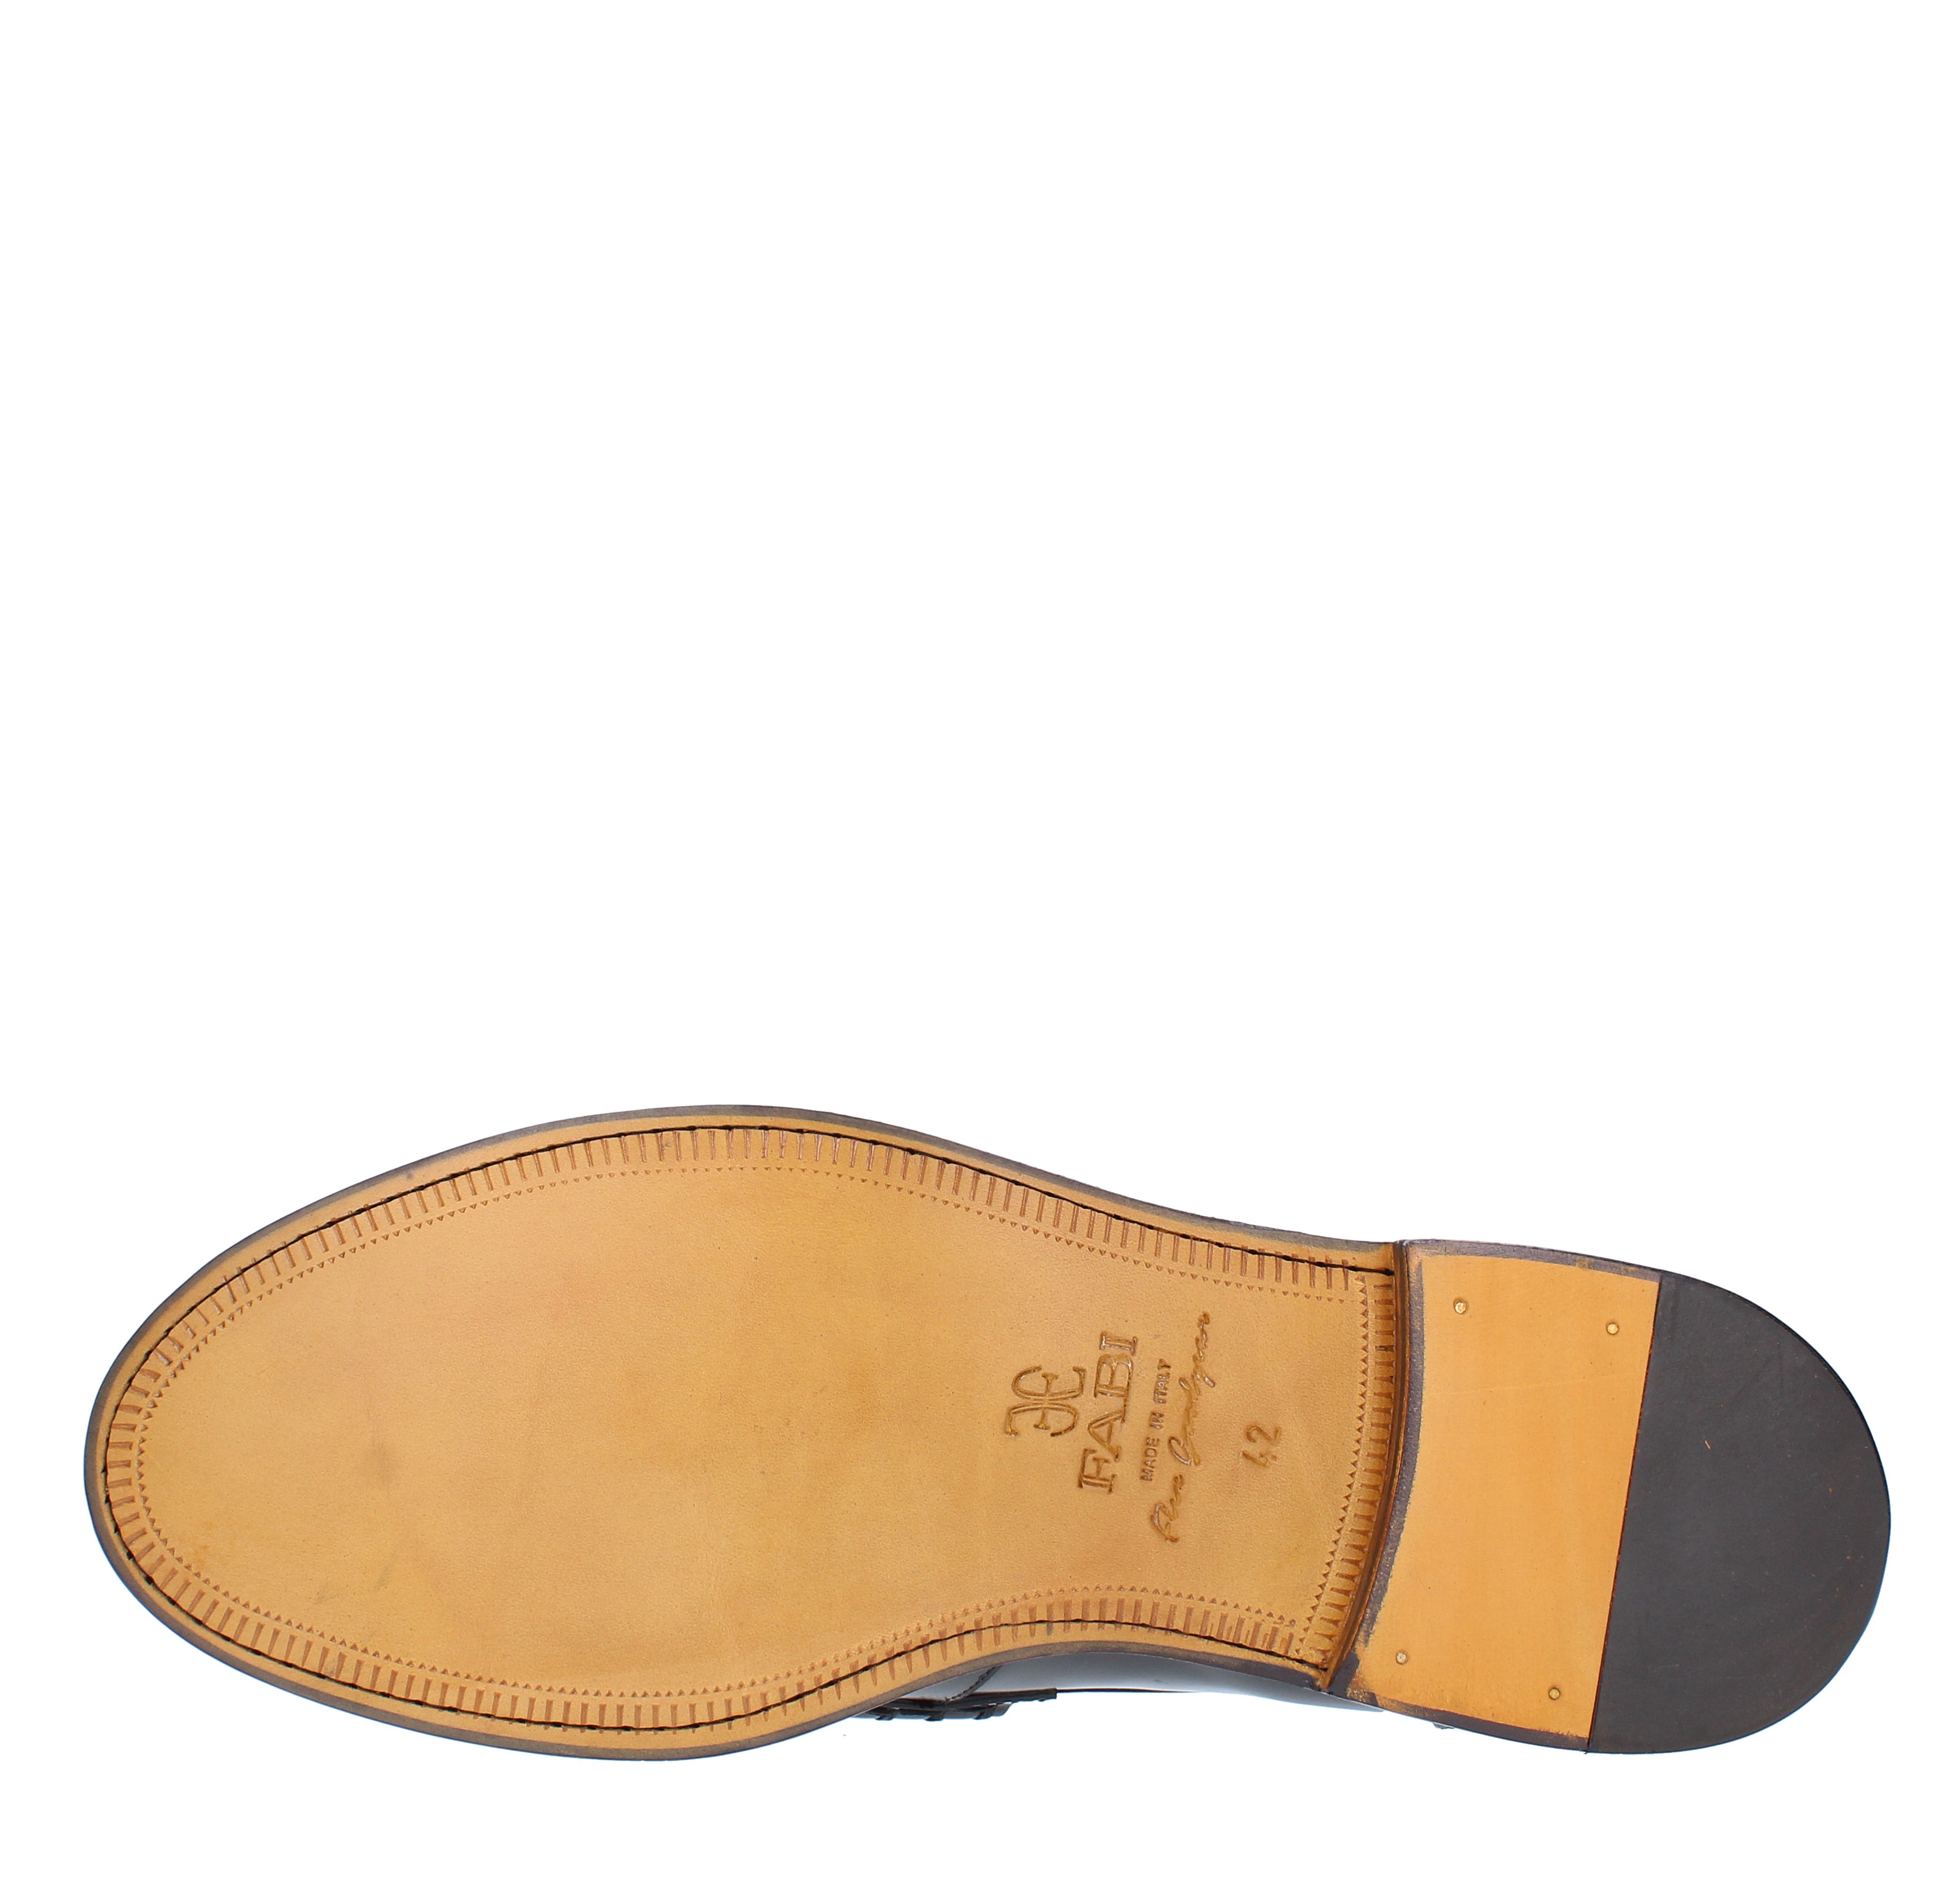 Leather loafers - FABI - Ginevra calzature